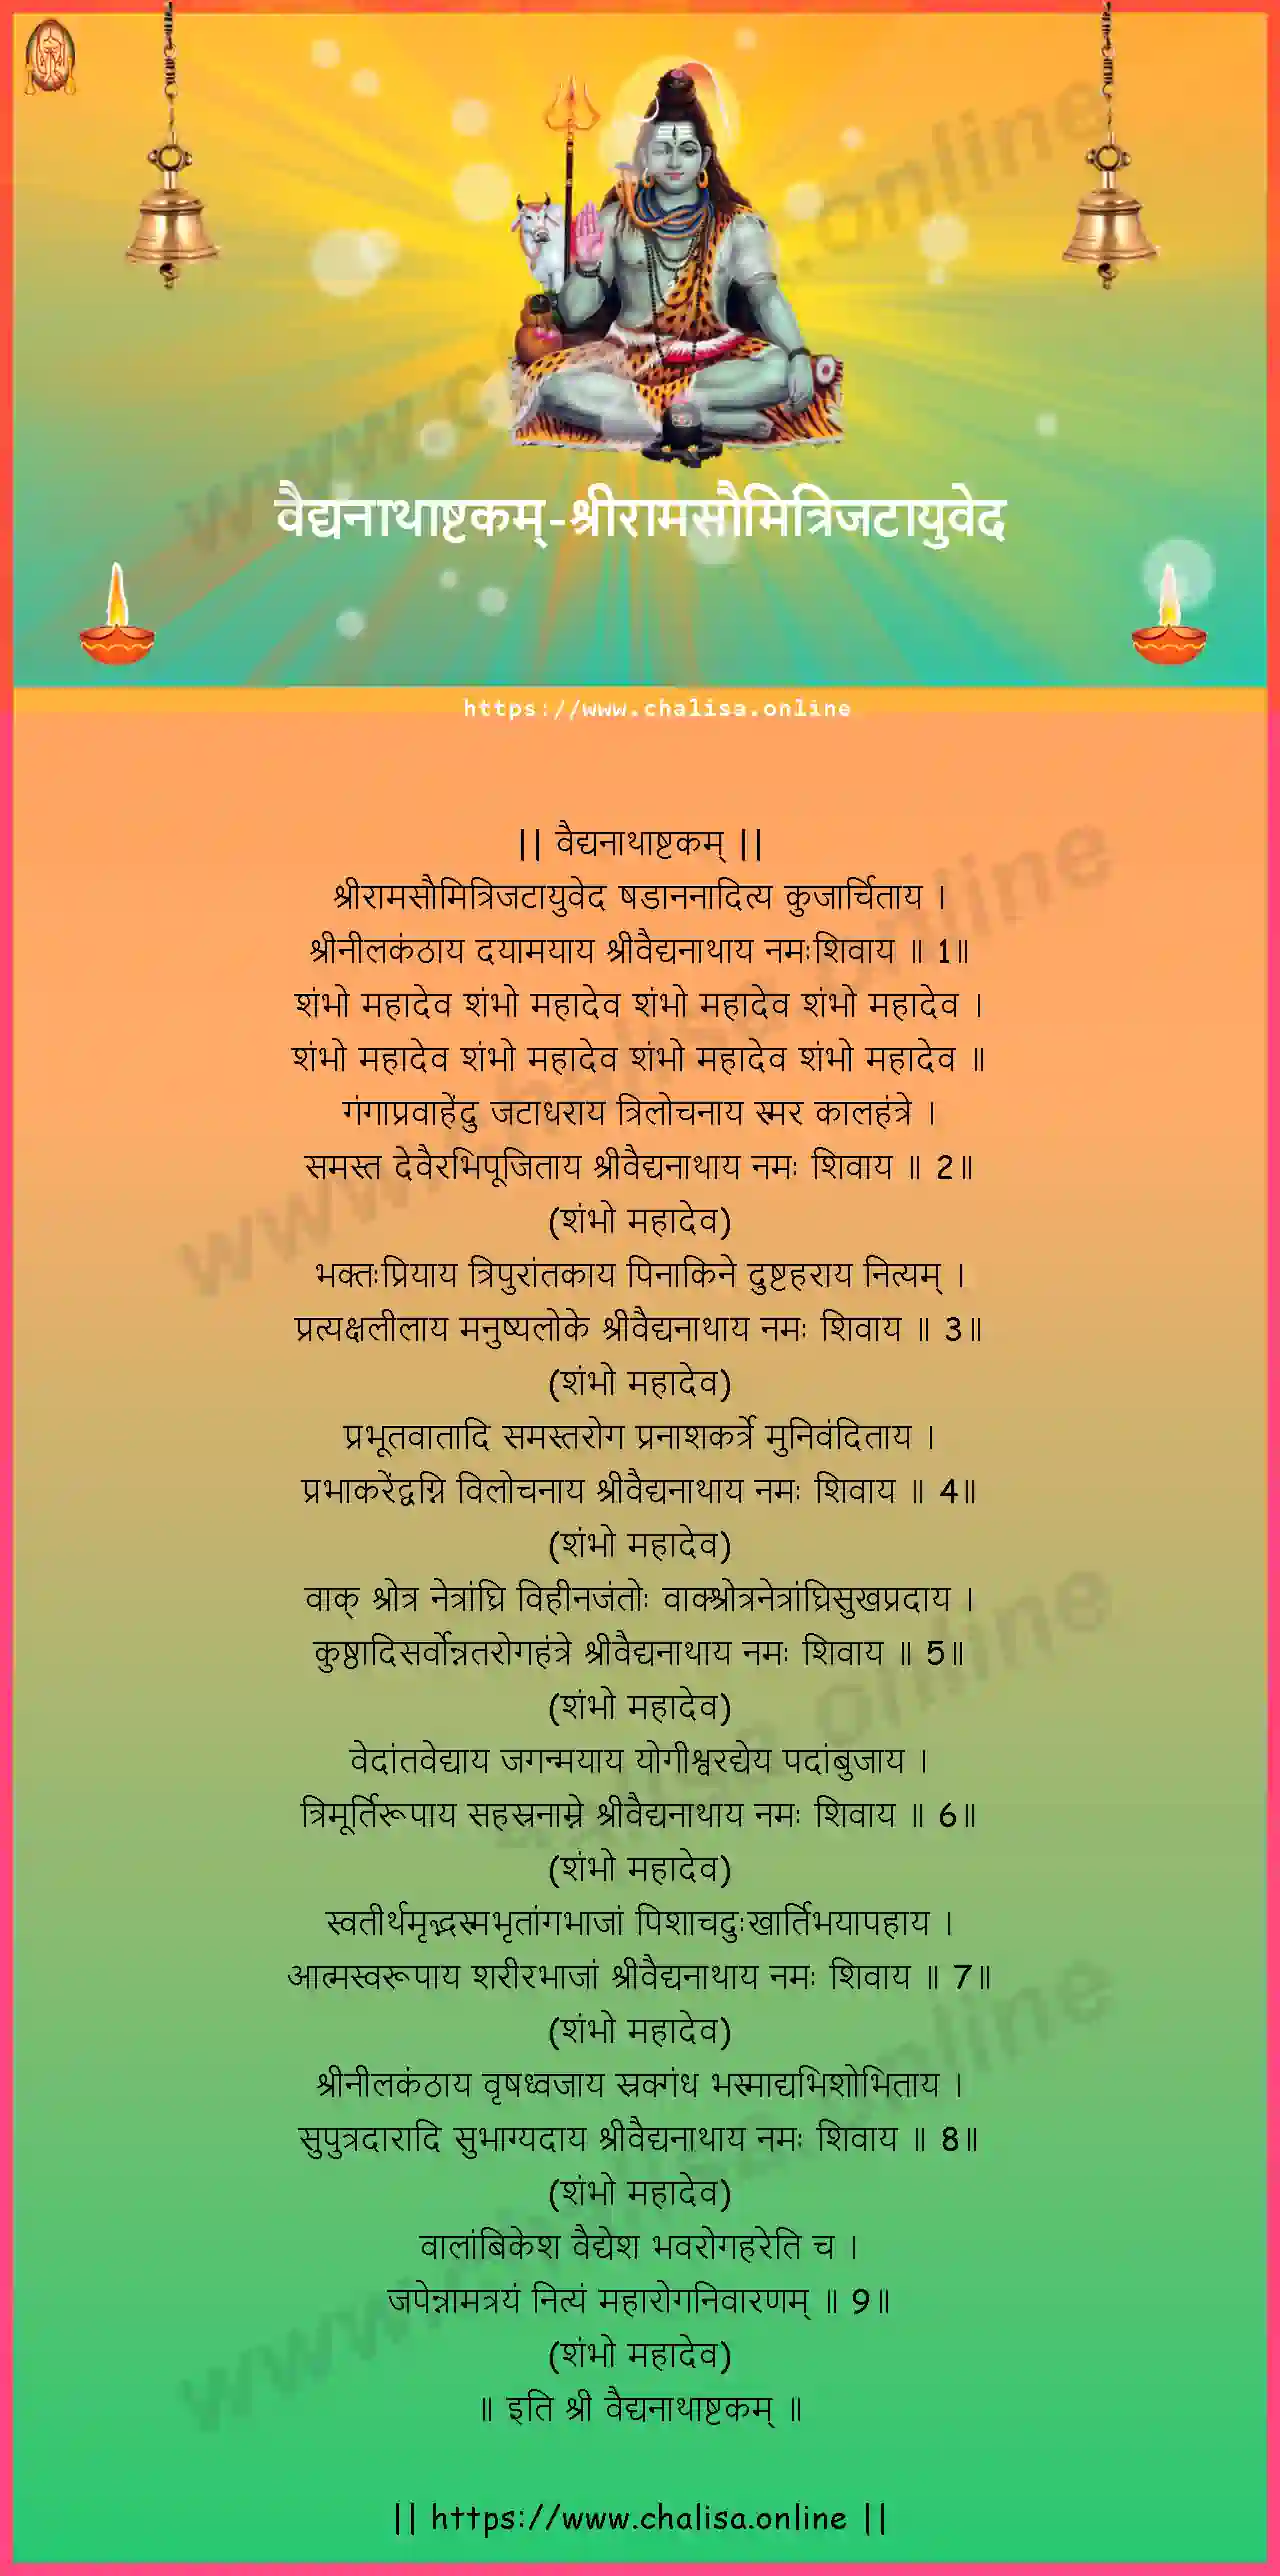 sriramasaumitrijatayuveda-vaidyanatha-ashtakam-marathi-marathi-lyrics-download